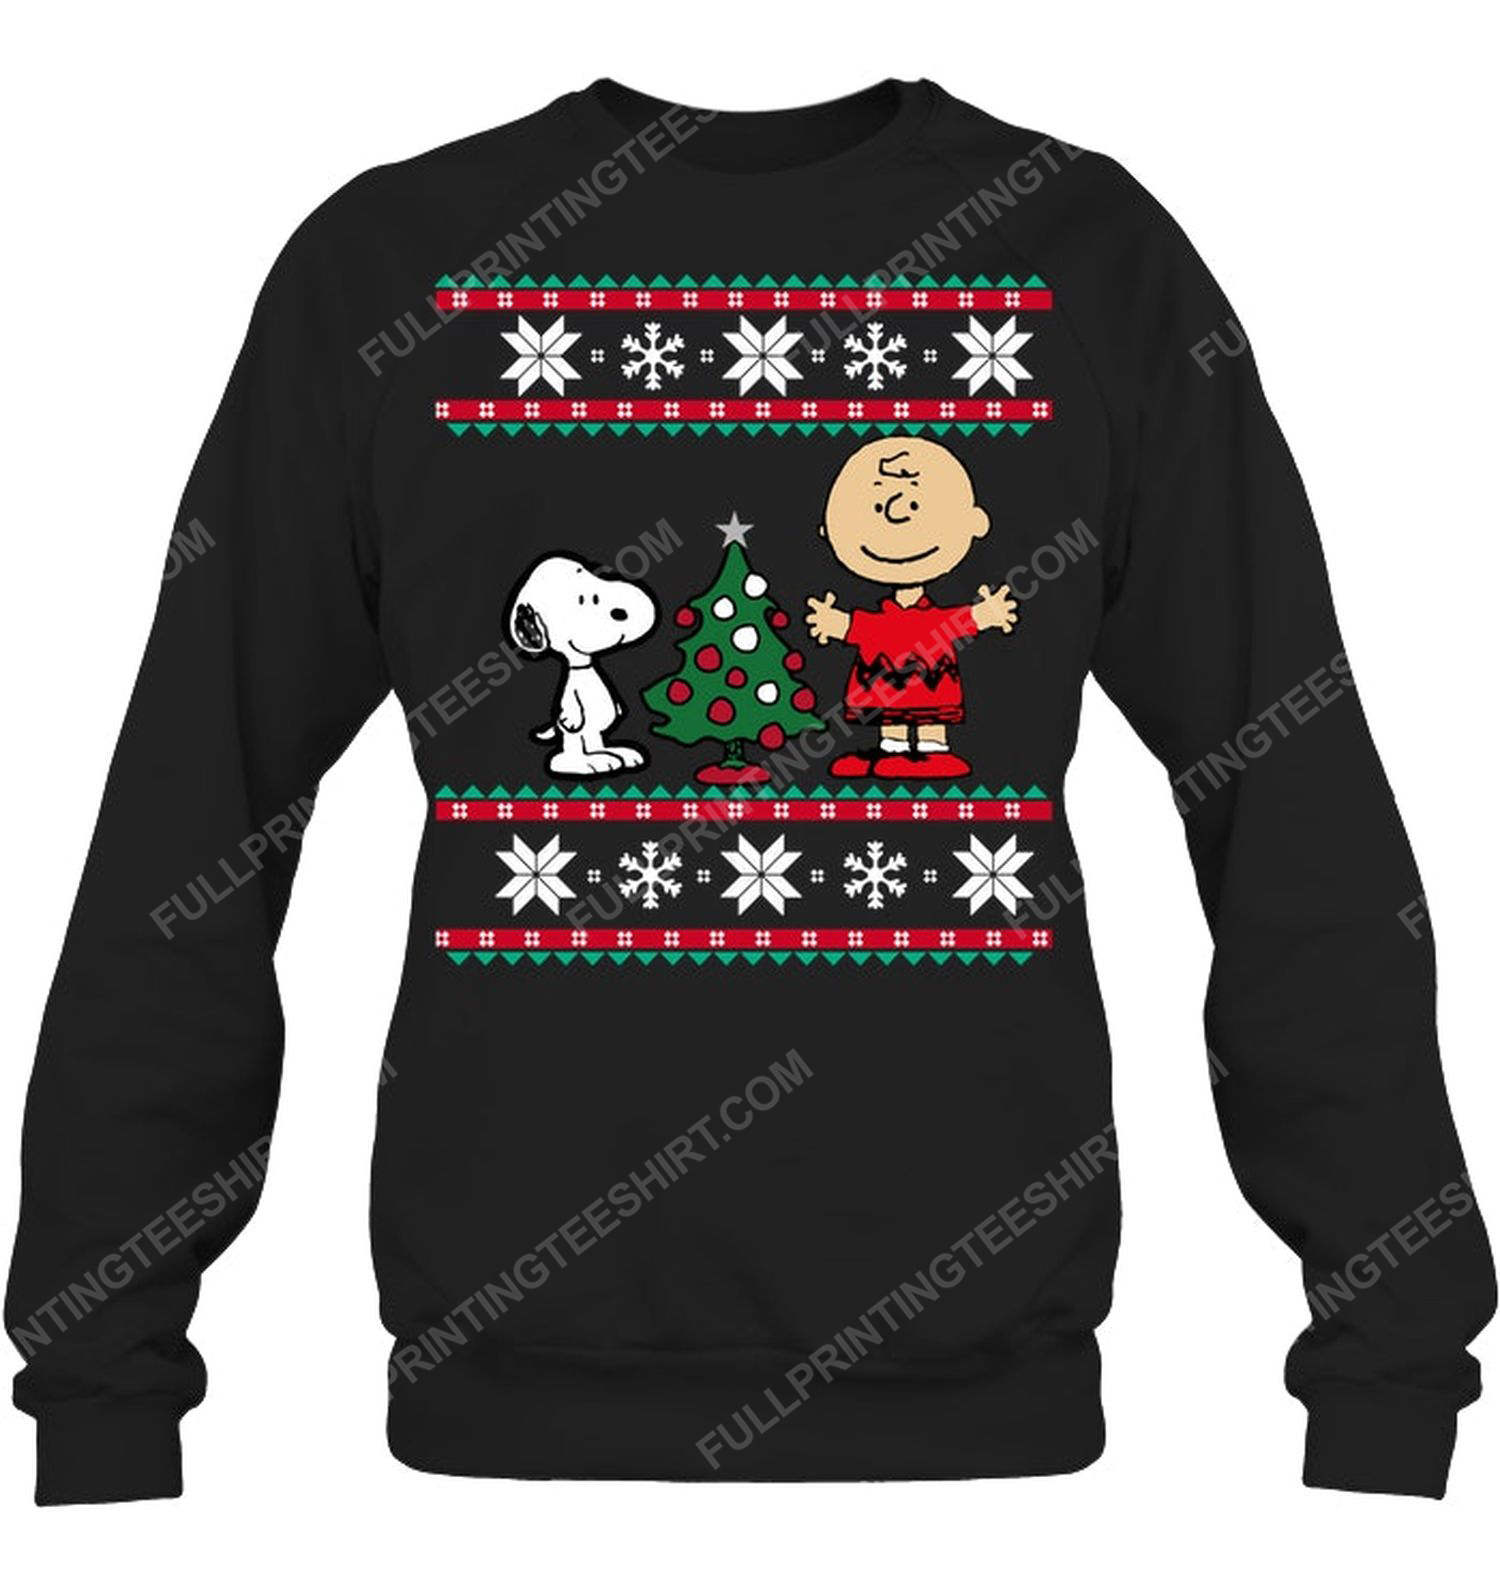 Charlie brown and snoopy with christmas tree sweatshirt